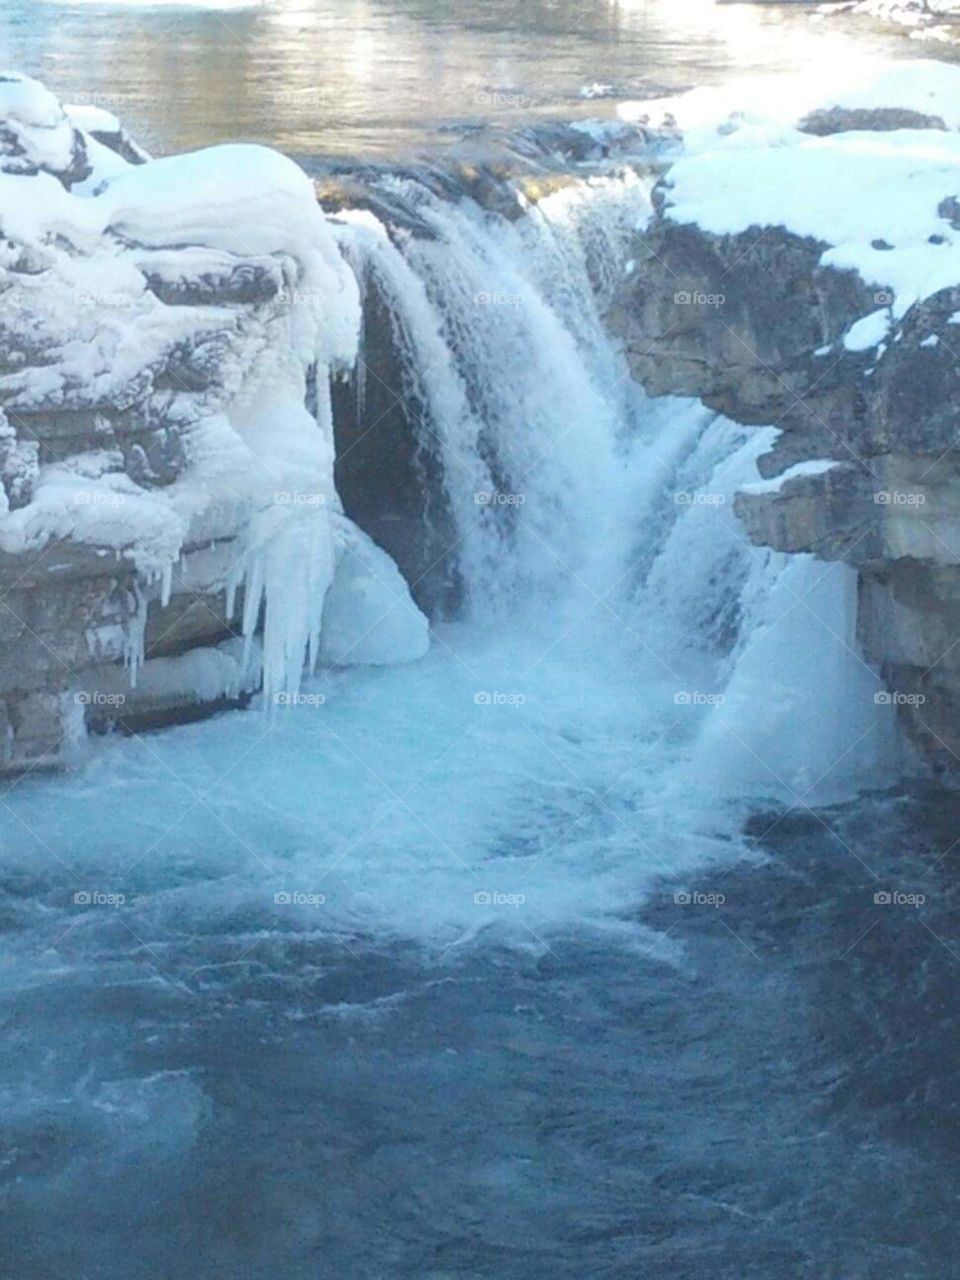 Winter waterfall